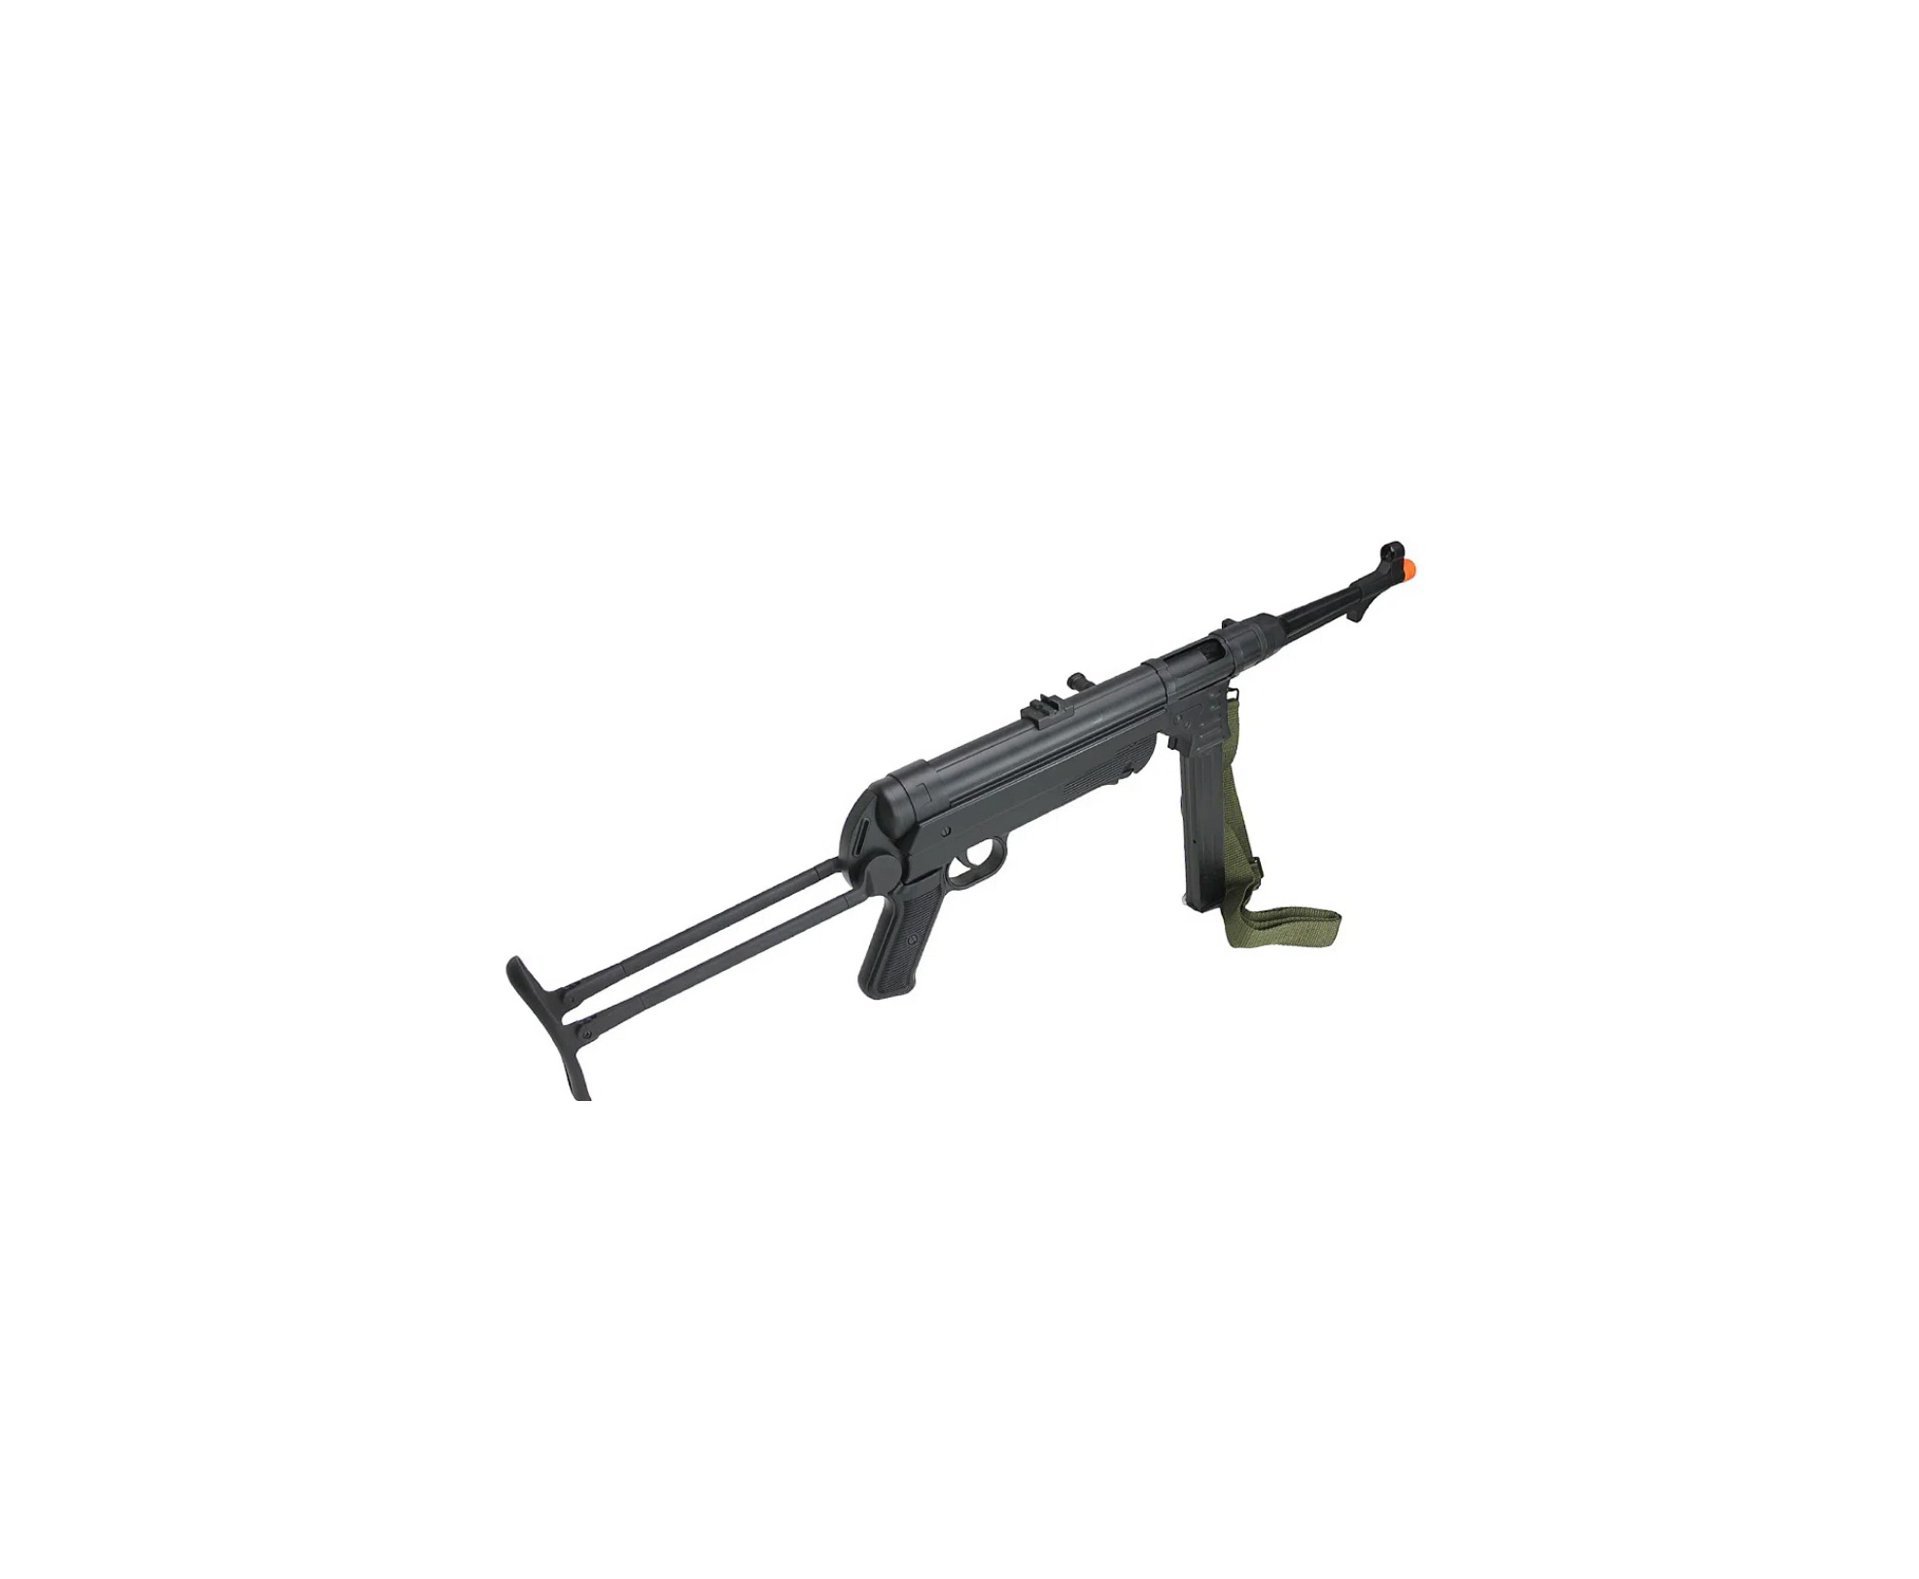 Rifle Sub Metralhadora de Airsoft AEG MP40 Full Metal Black - AGM + Bateria + Carregador + BBS + Capa + Alvos + Kamuff